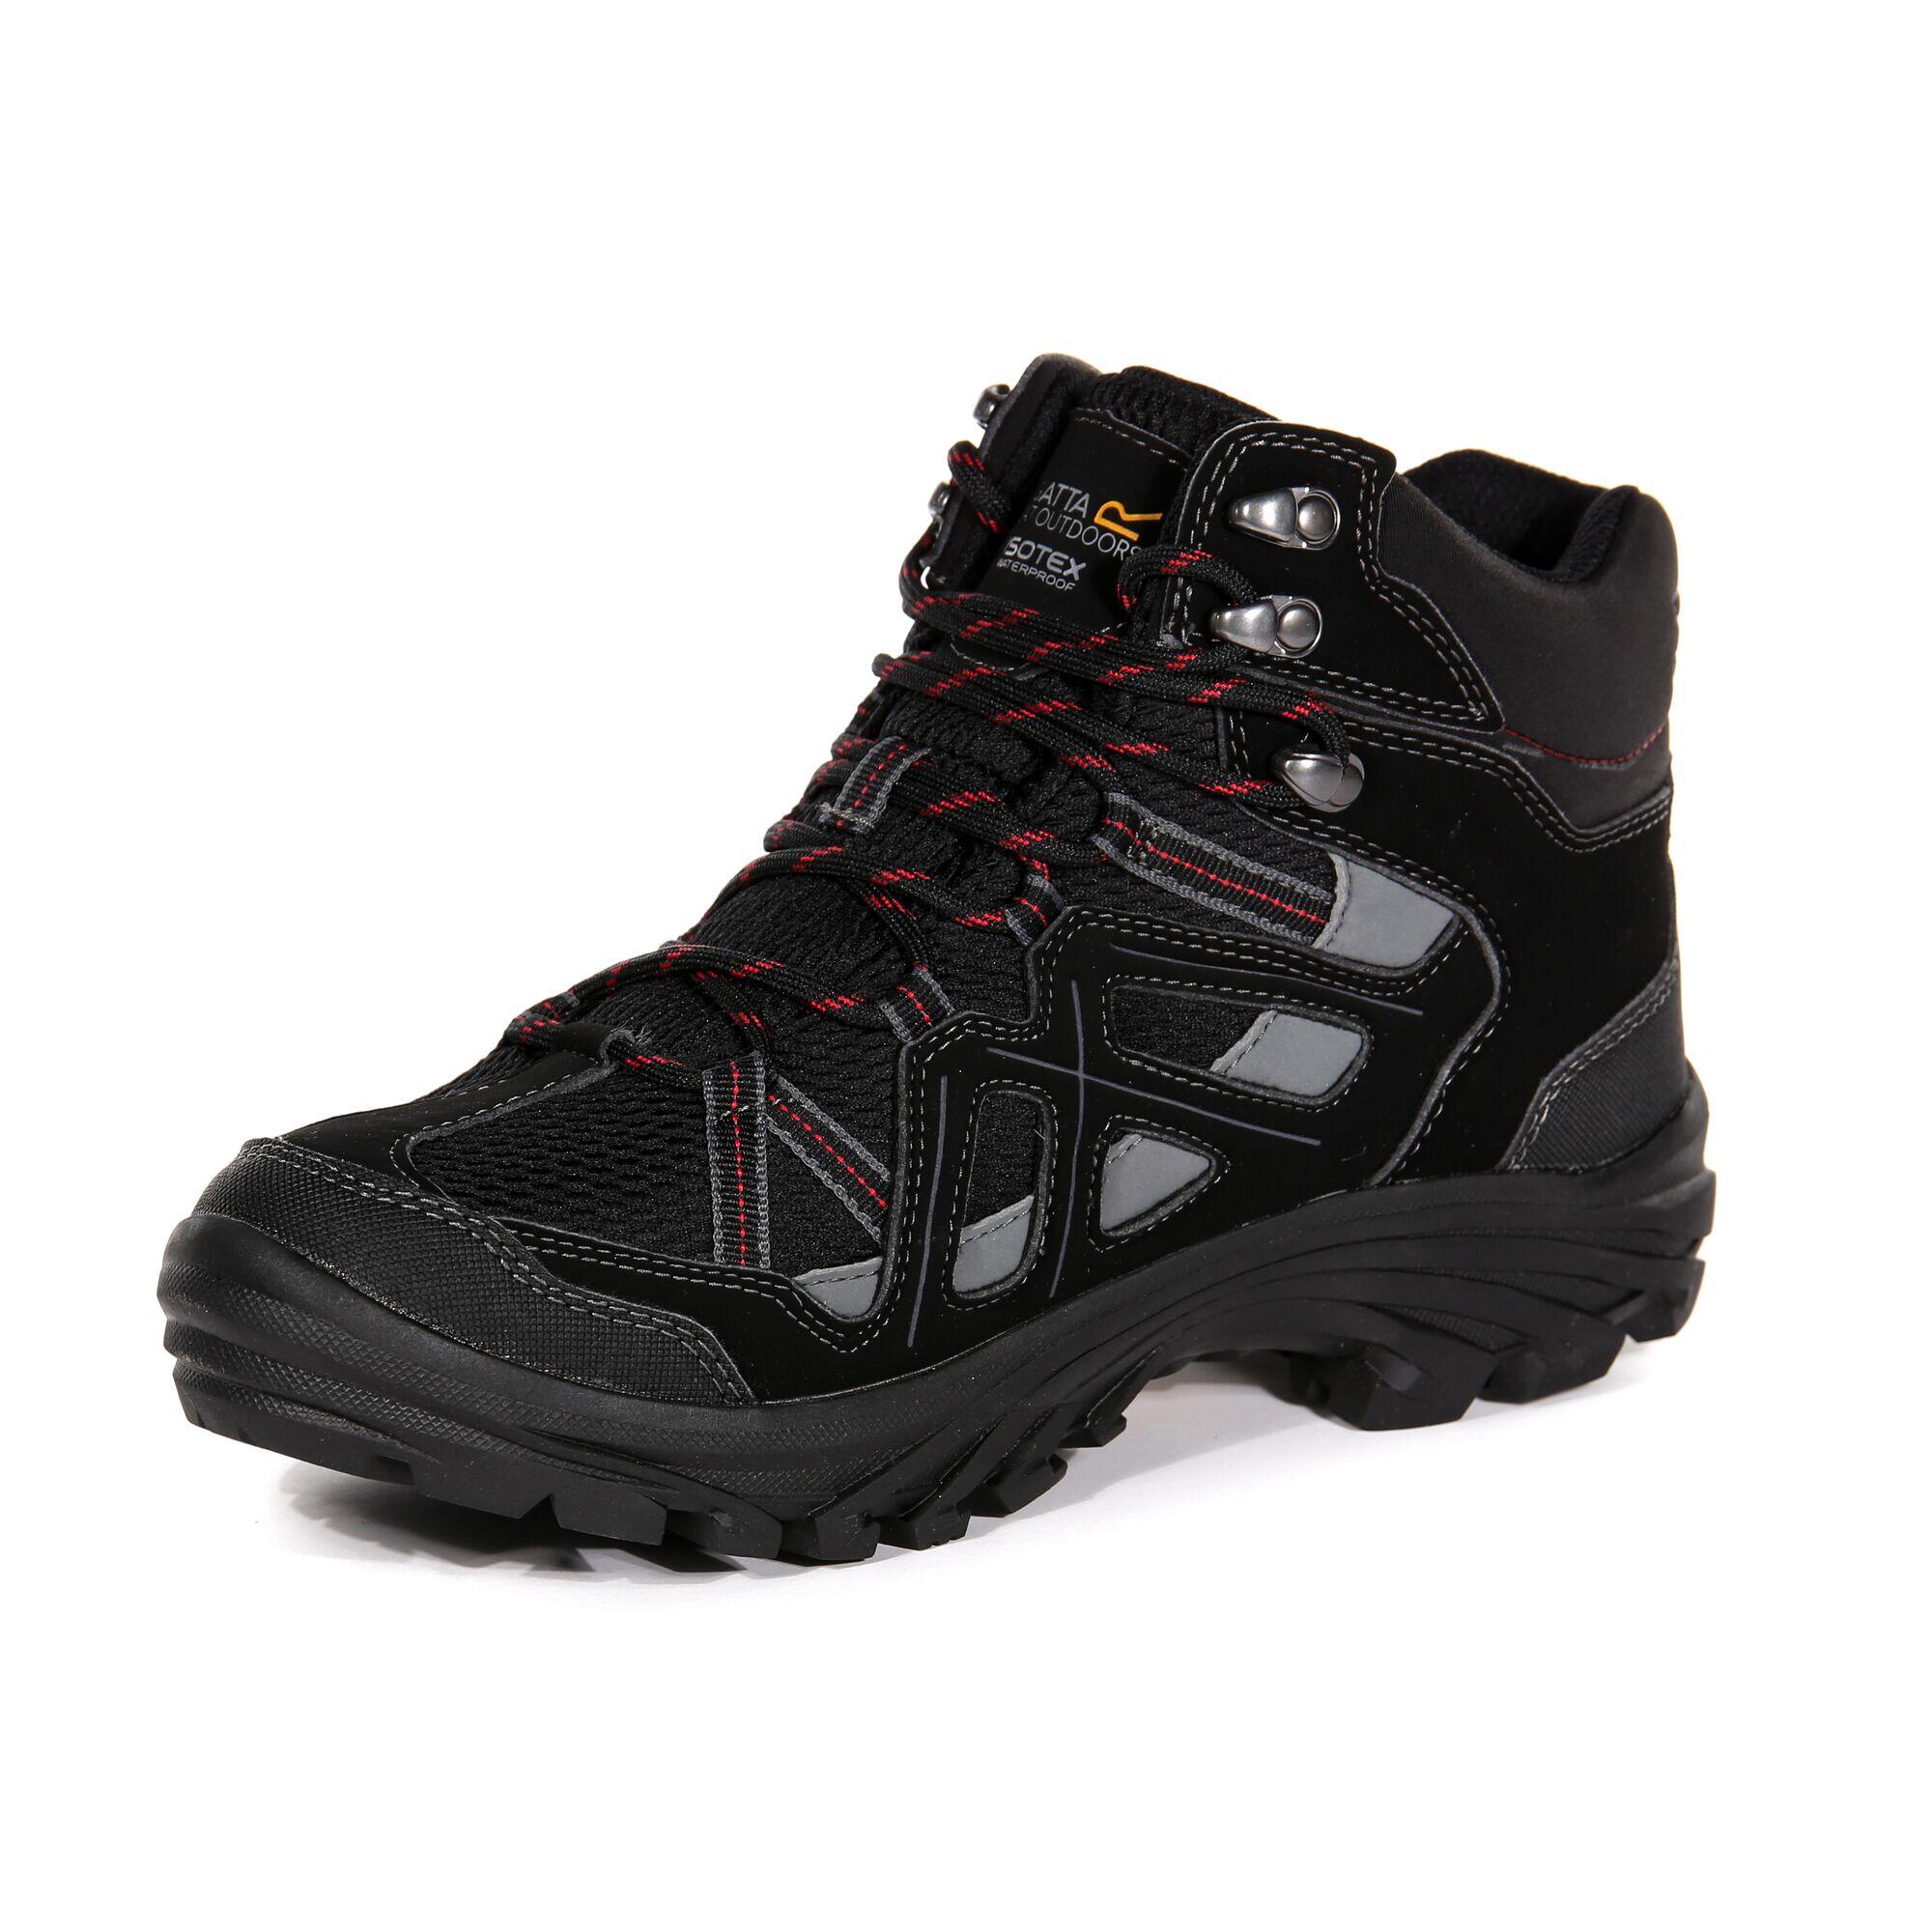 Burrell II Men's Hiking Boots - Black/Grey 4/5